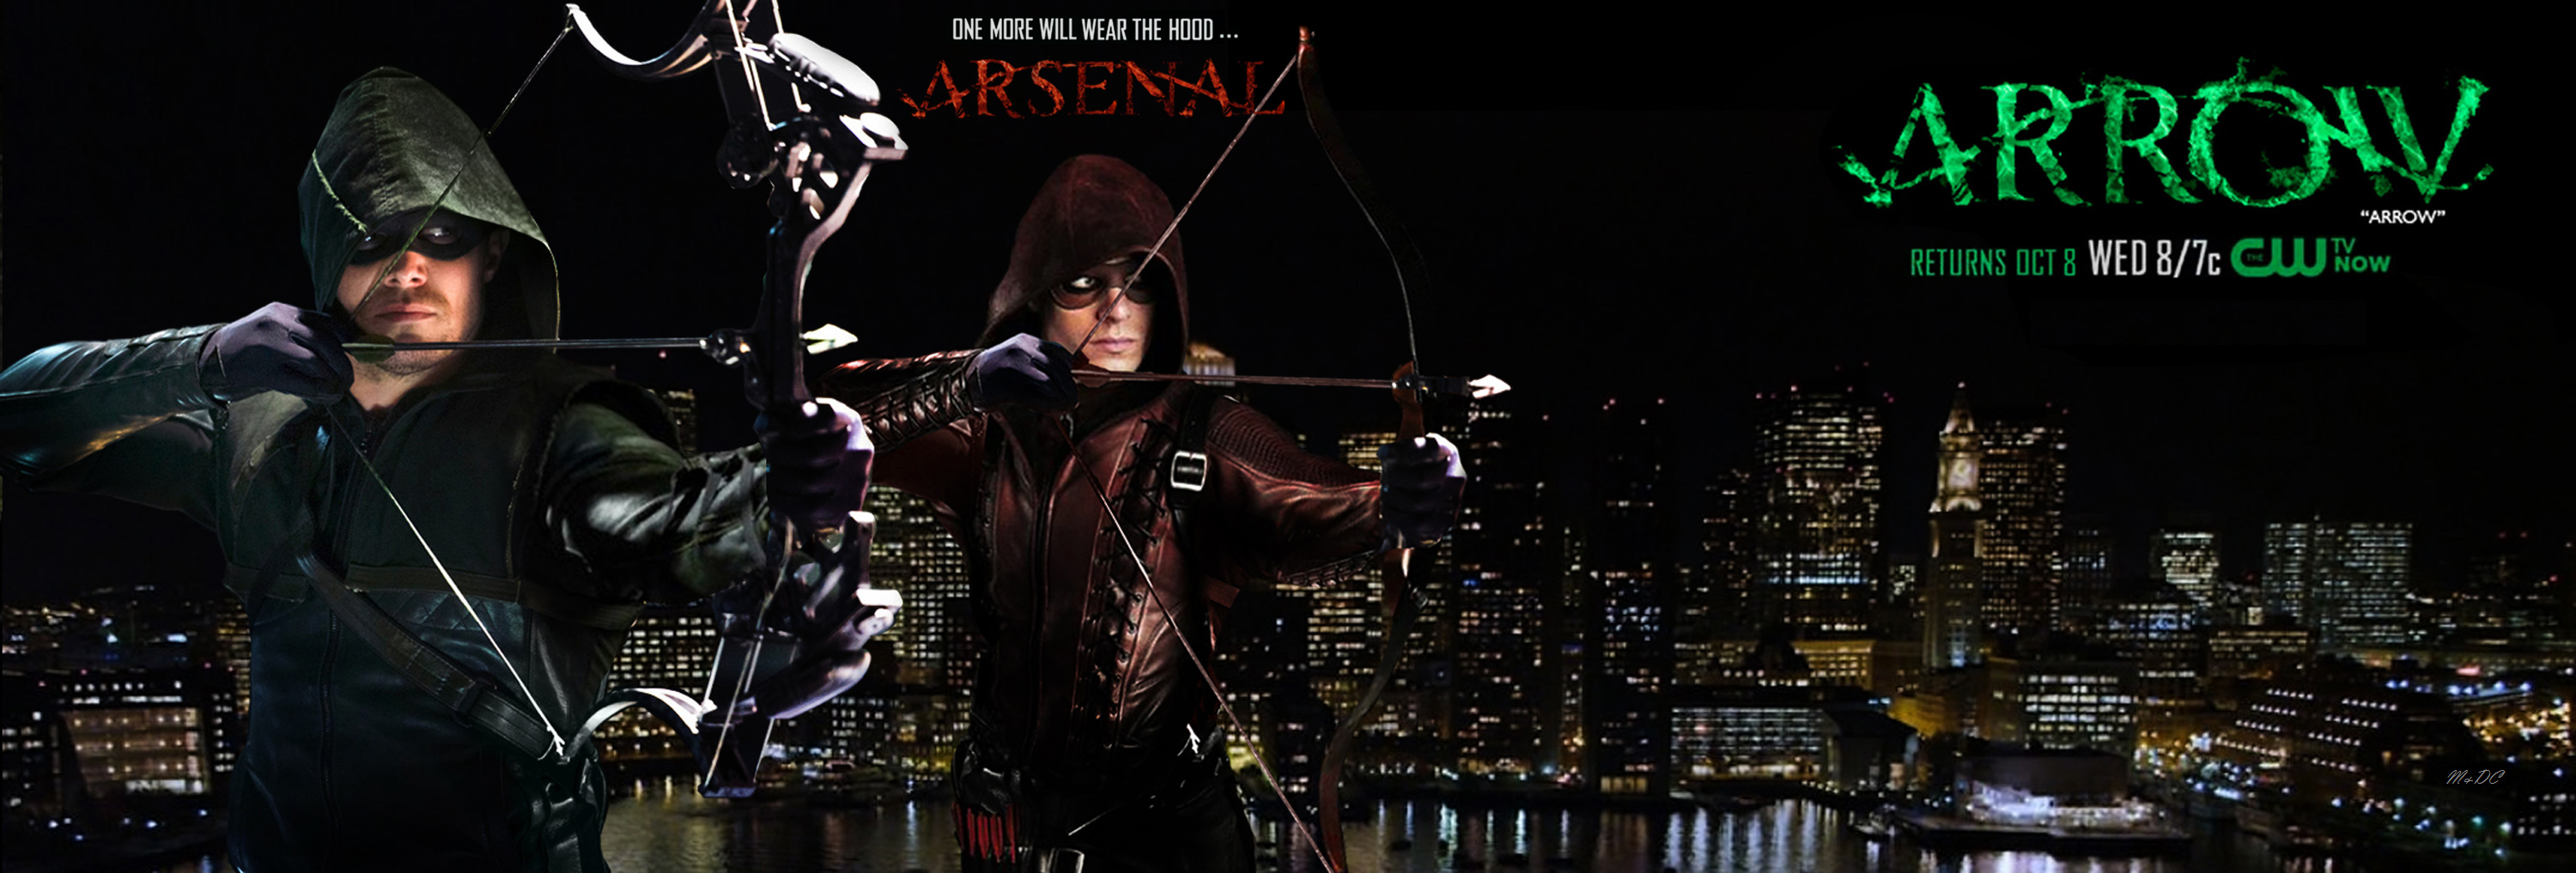 Arrow Season Promo By Fmirza95